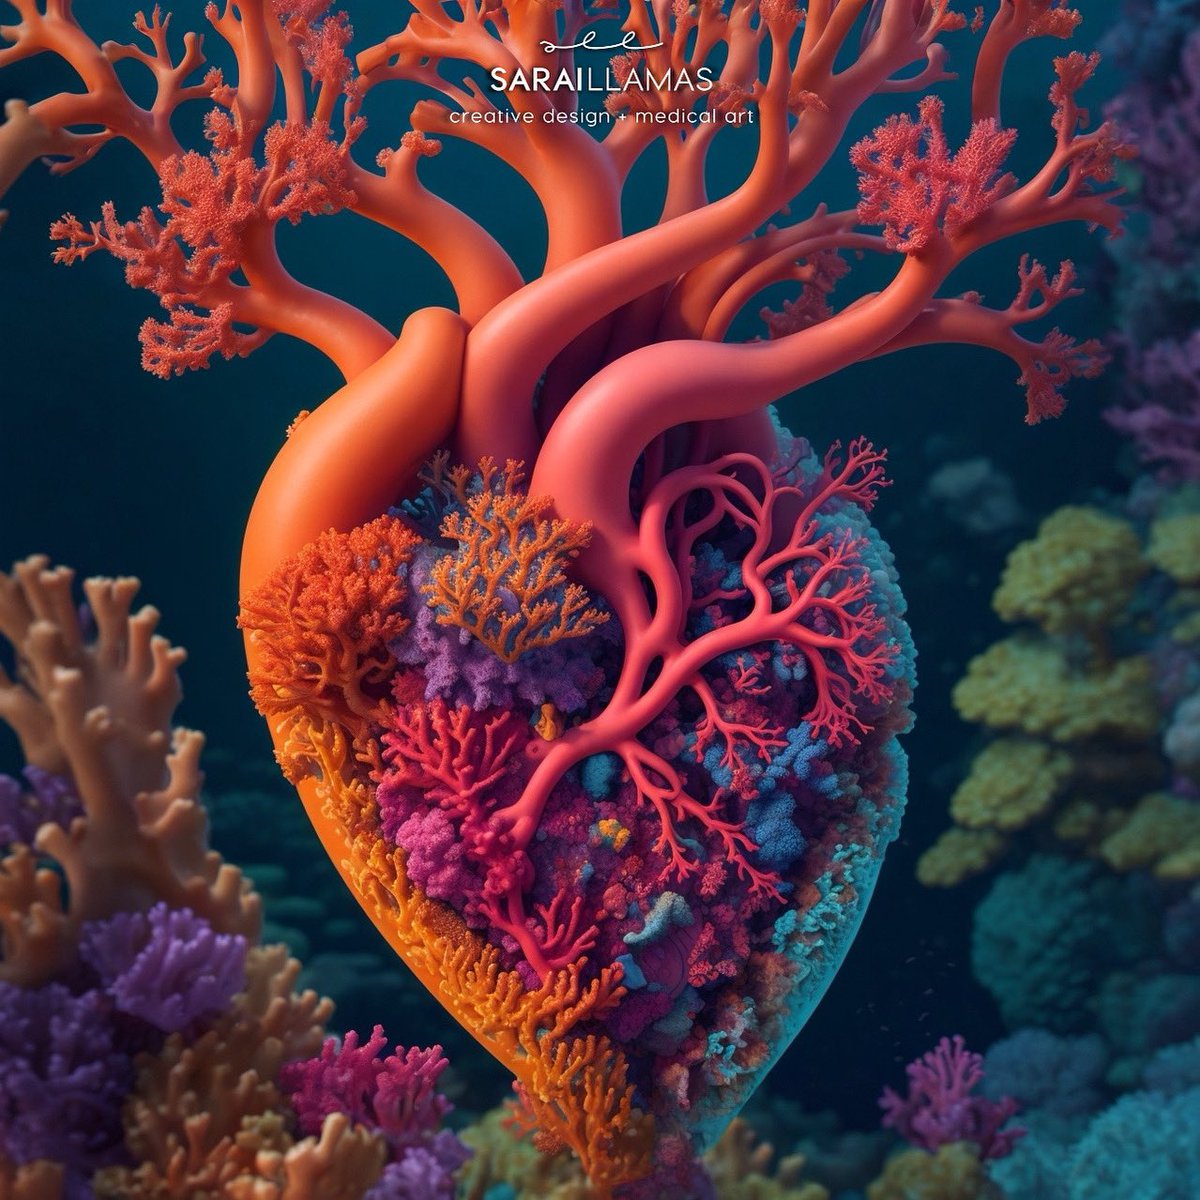 THALASSOPHILE

#oceans #savetheoceans #sciart #biology #oceanlife #marinebiology #scienceart #medart #medicalart #cardiologia #cardiology #heART #anatomyart #anatomy